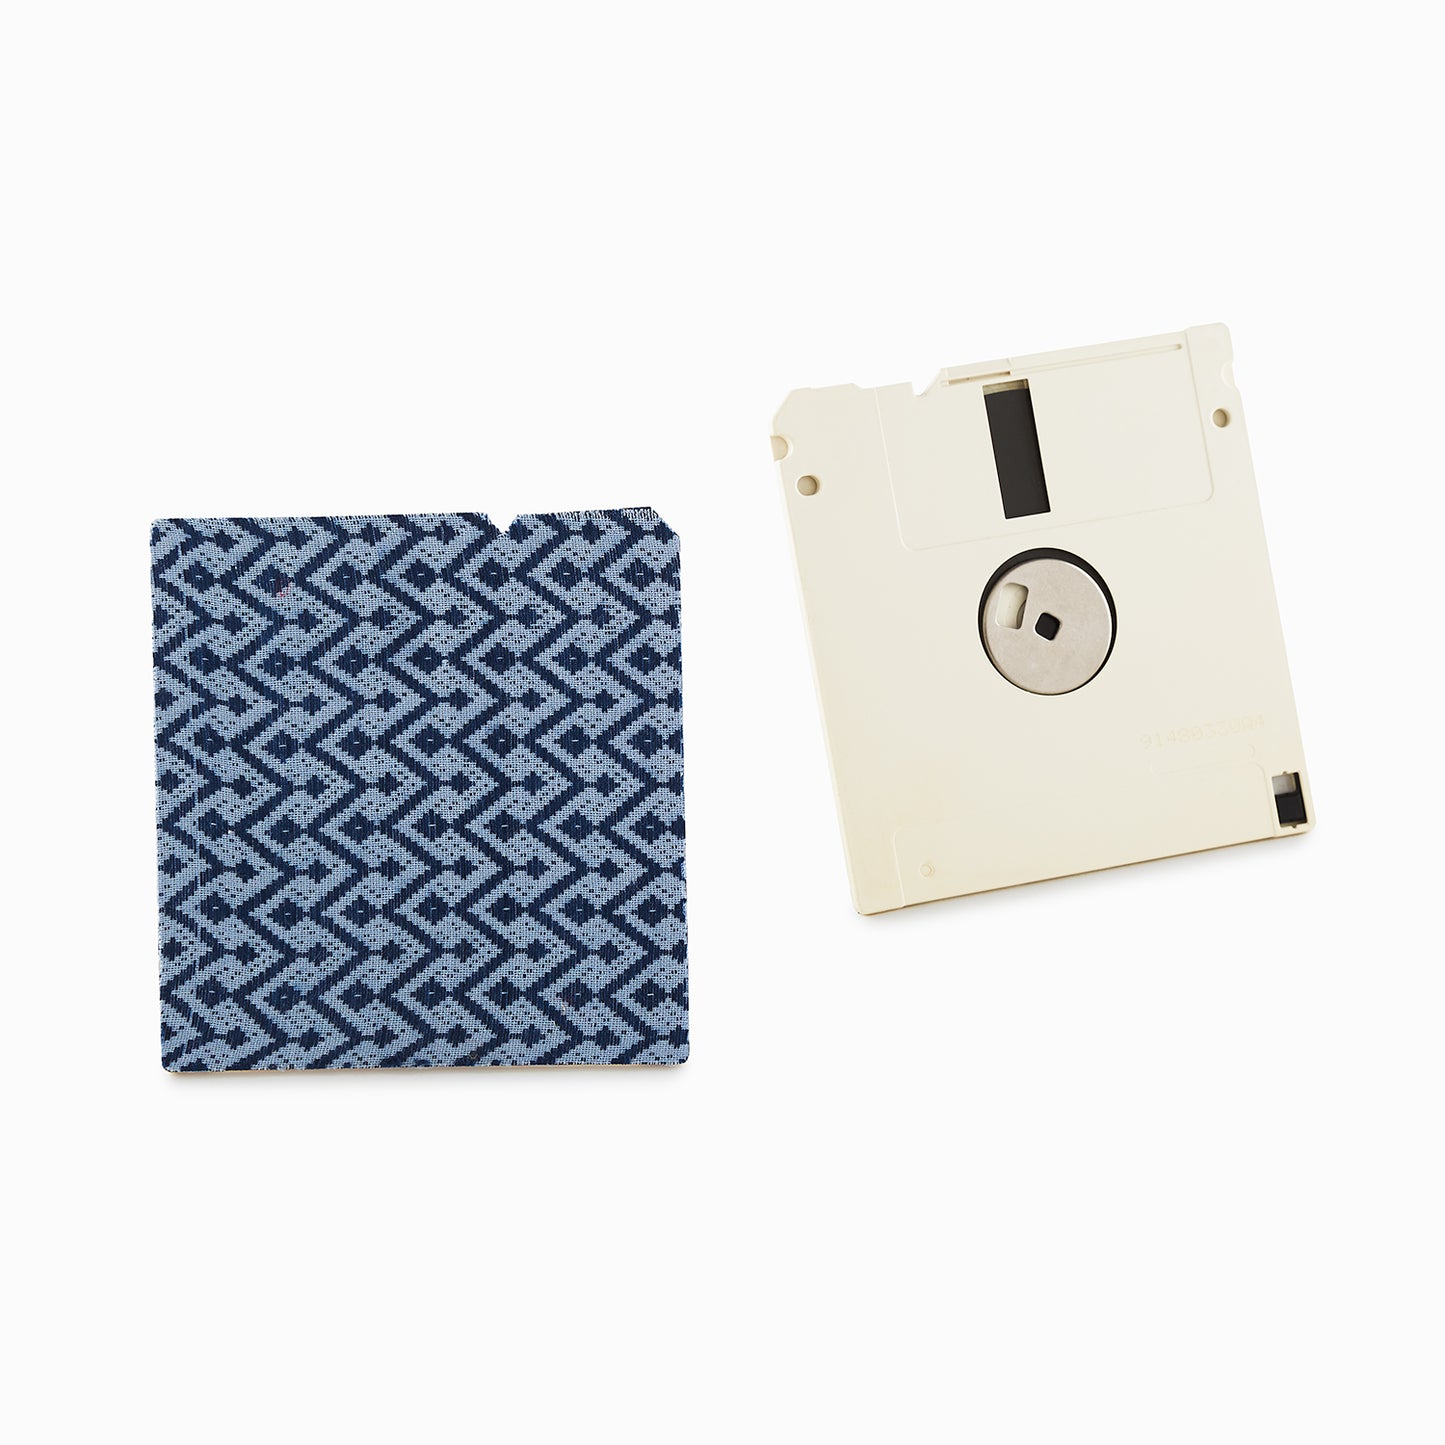 Stone Blue - Floppy Disk Coaster Set of 2